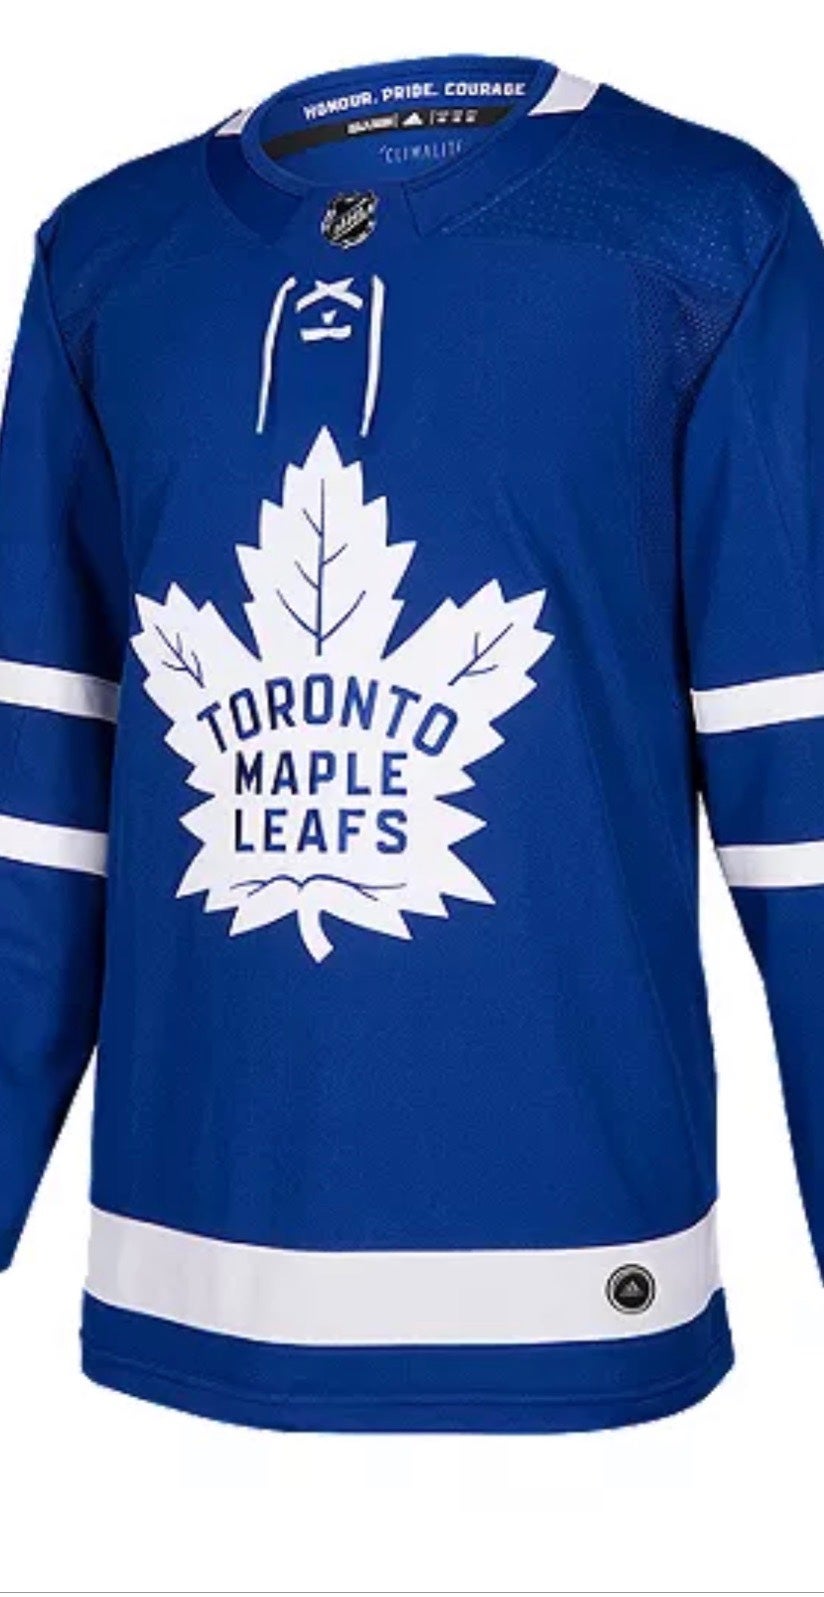 New White Size 52 (Large) Adidas Toronto Maple Leafs Tavares Authentic  Jersey